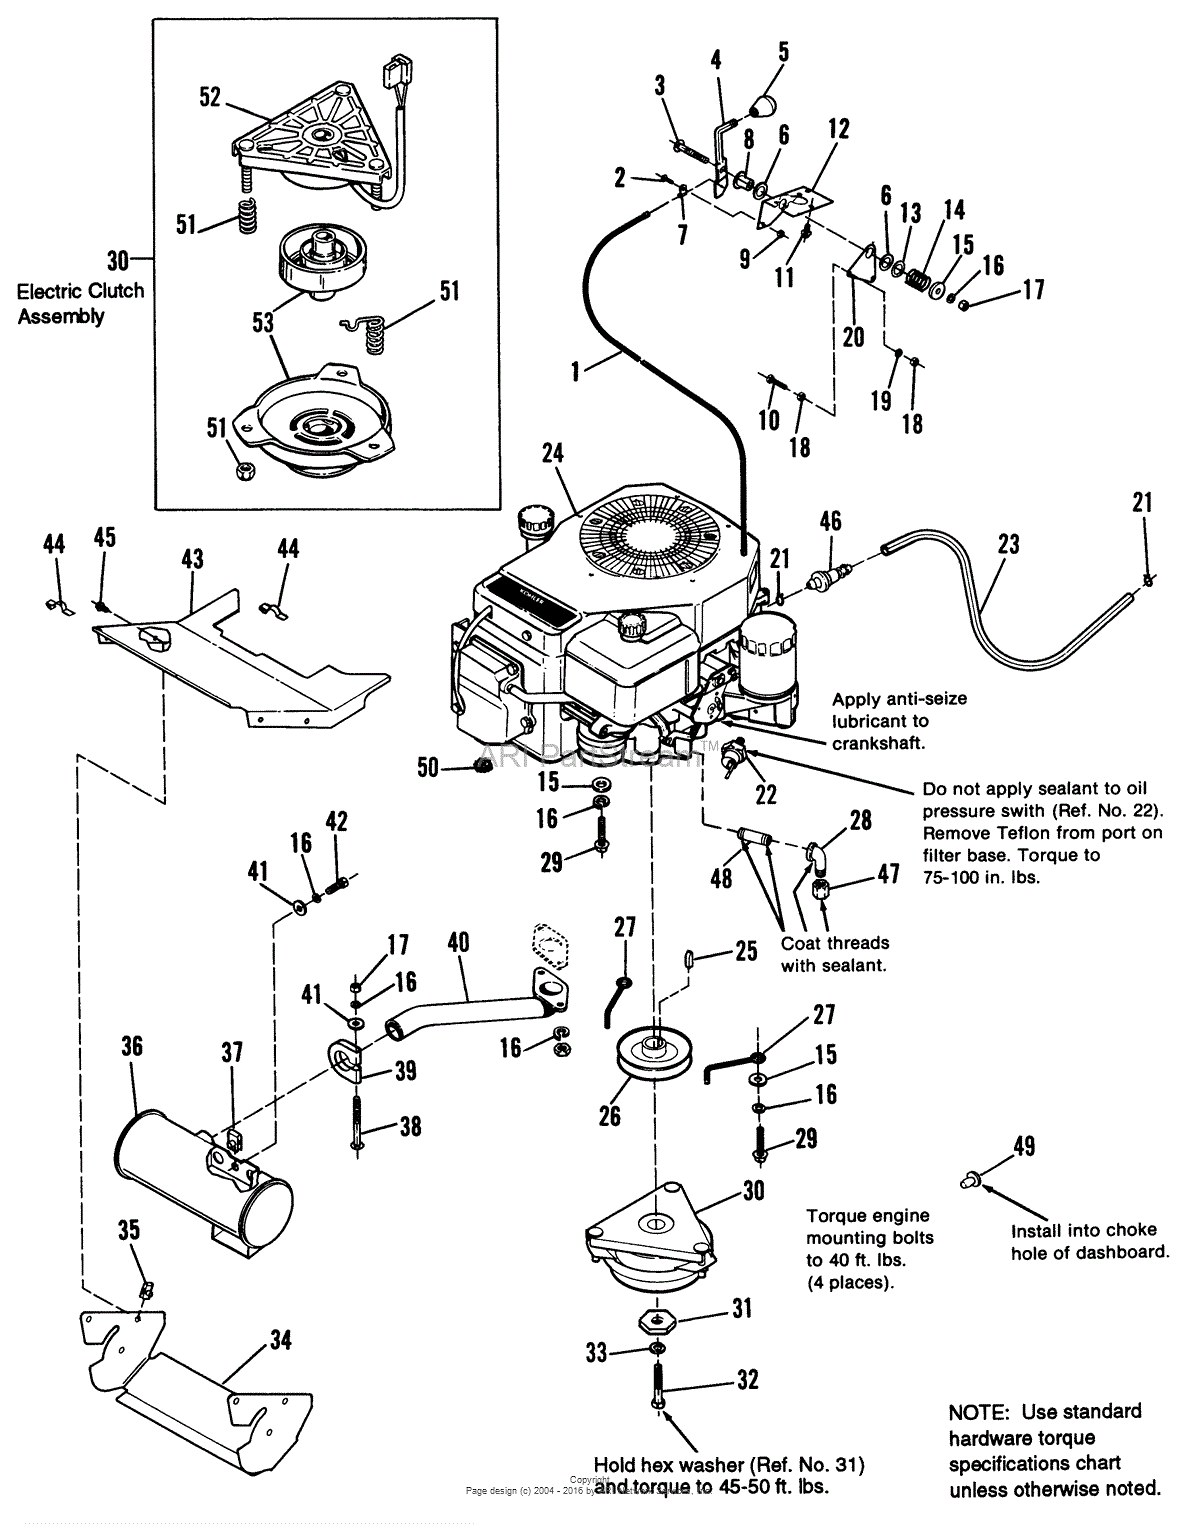 25 Hp Kohler Engine Parts Diagram - Heat exchanger spare parts